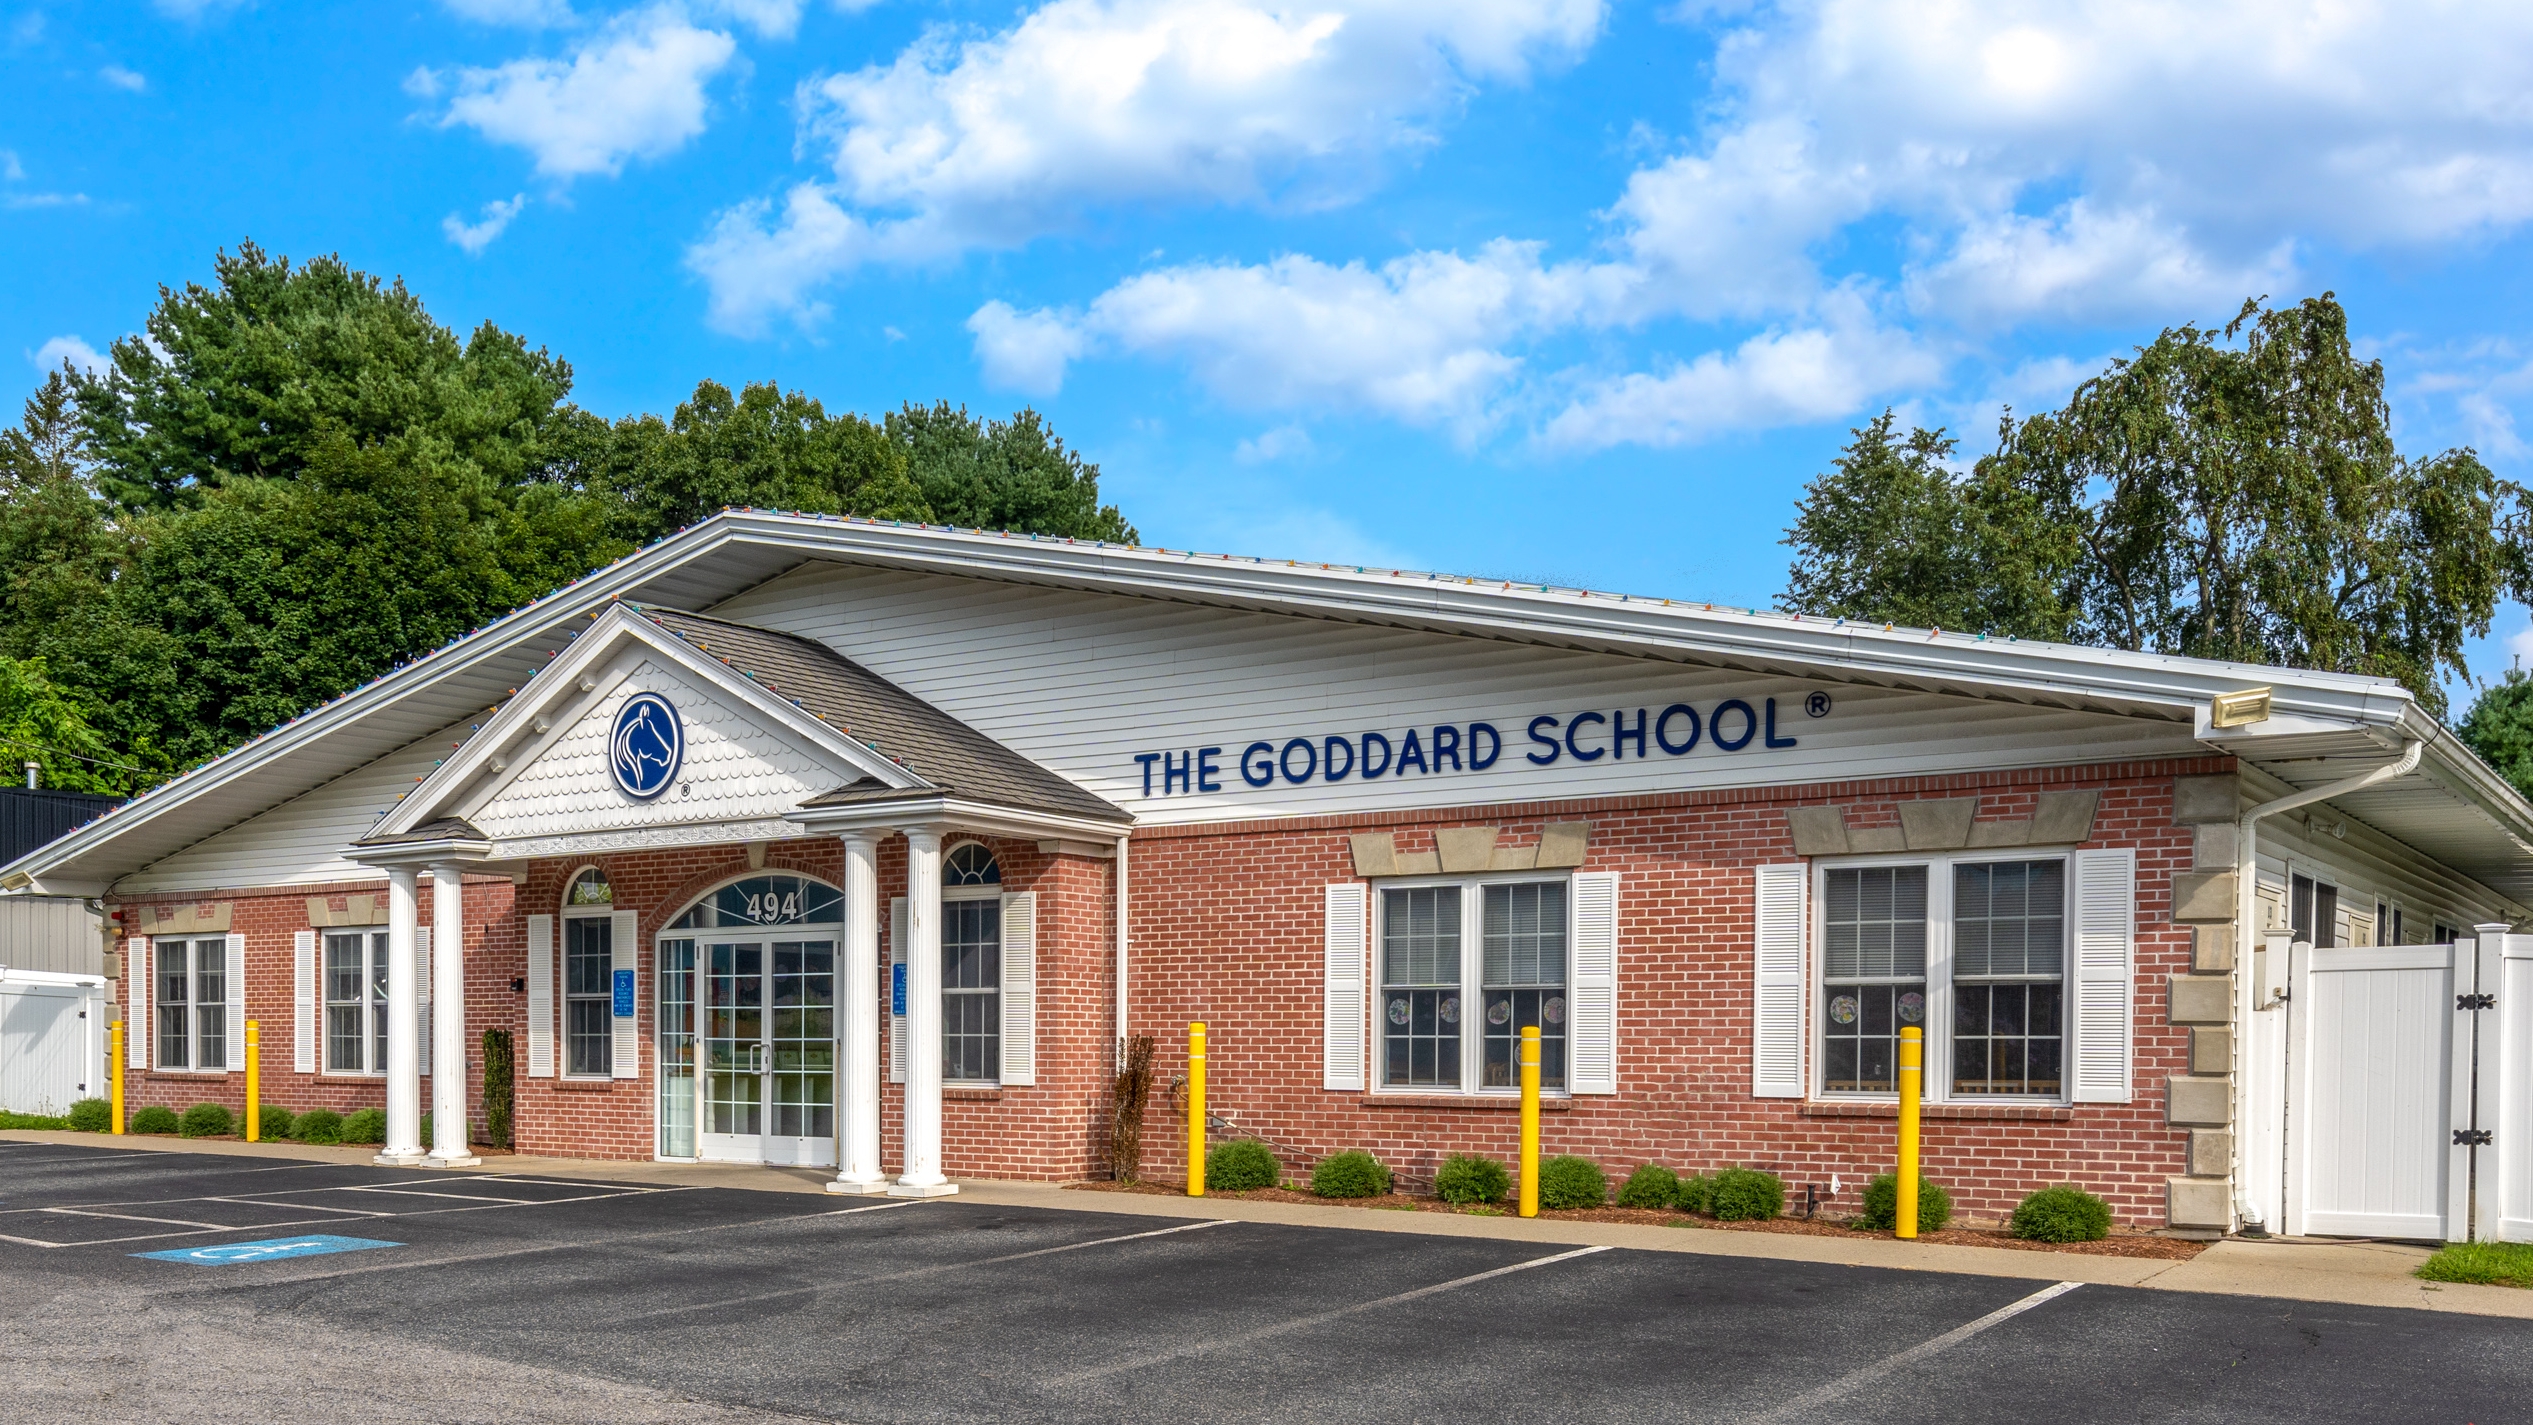 The Goddard School of Auburn Auburn (508)832-7400